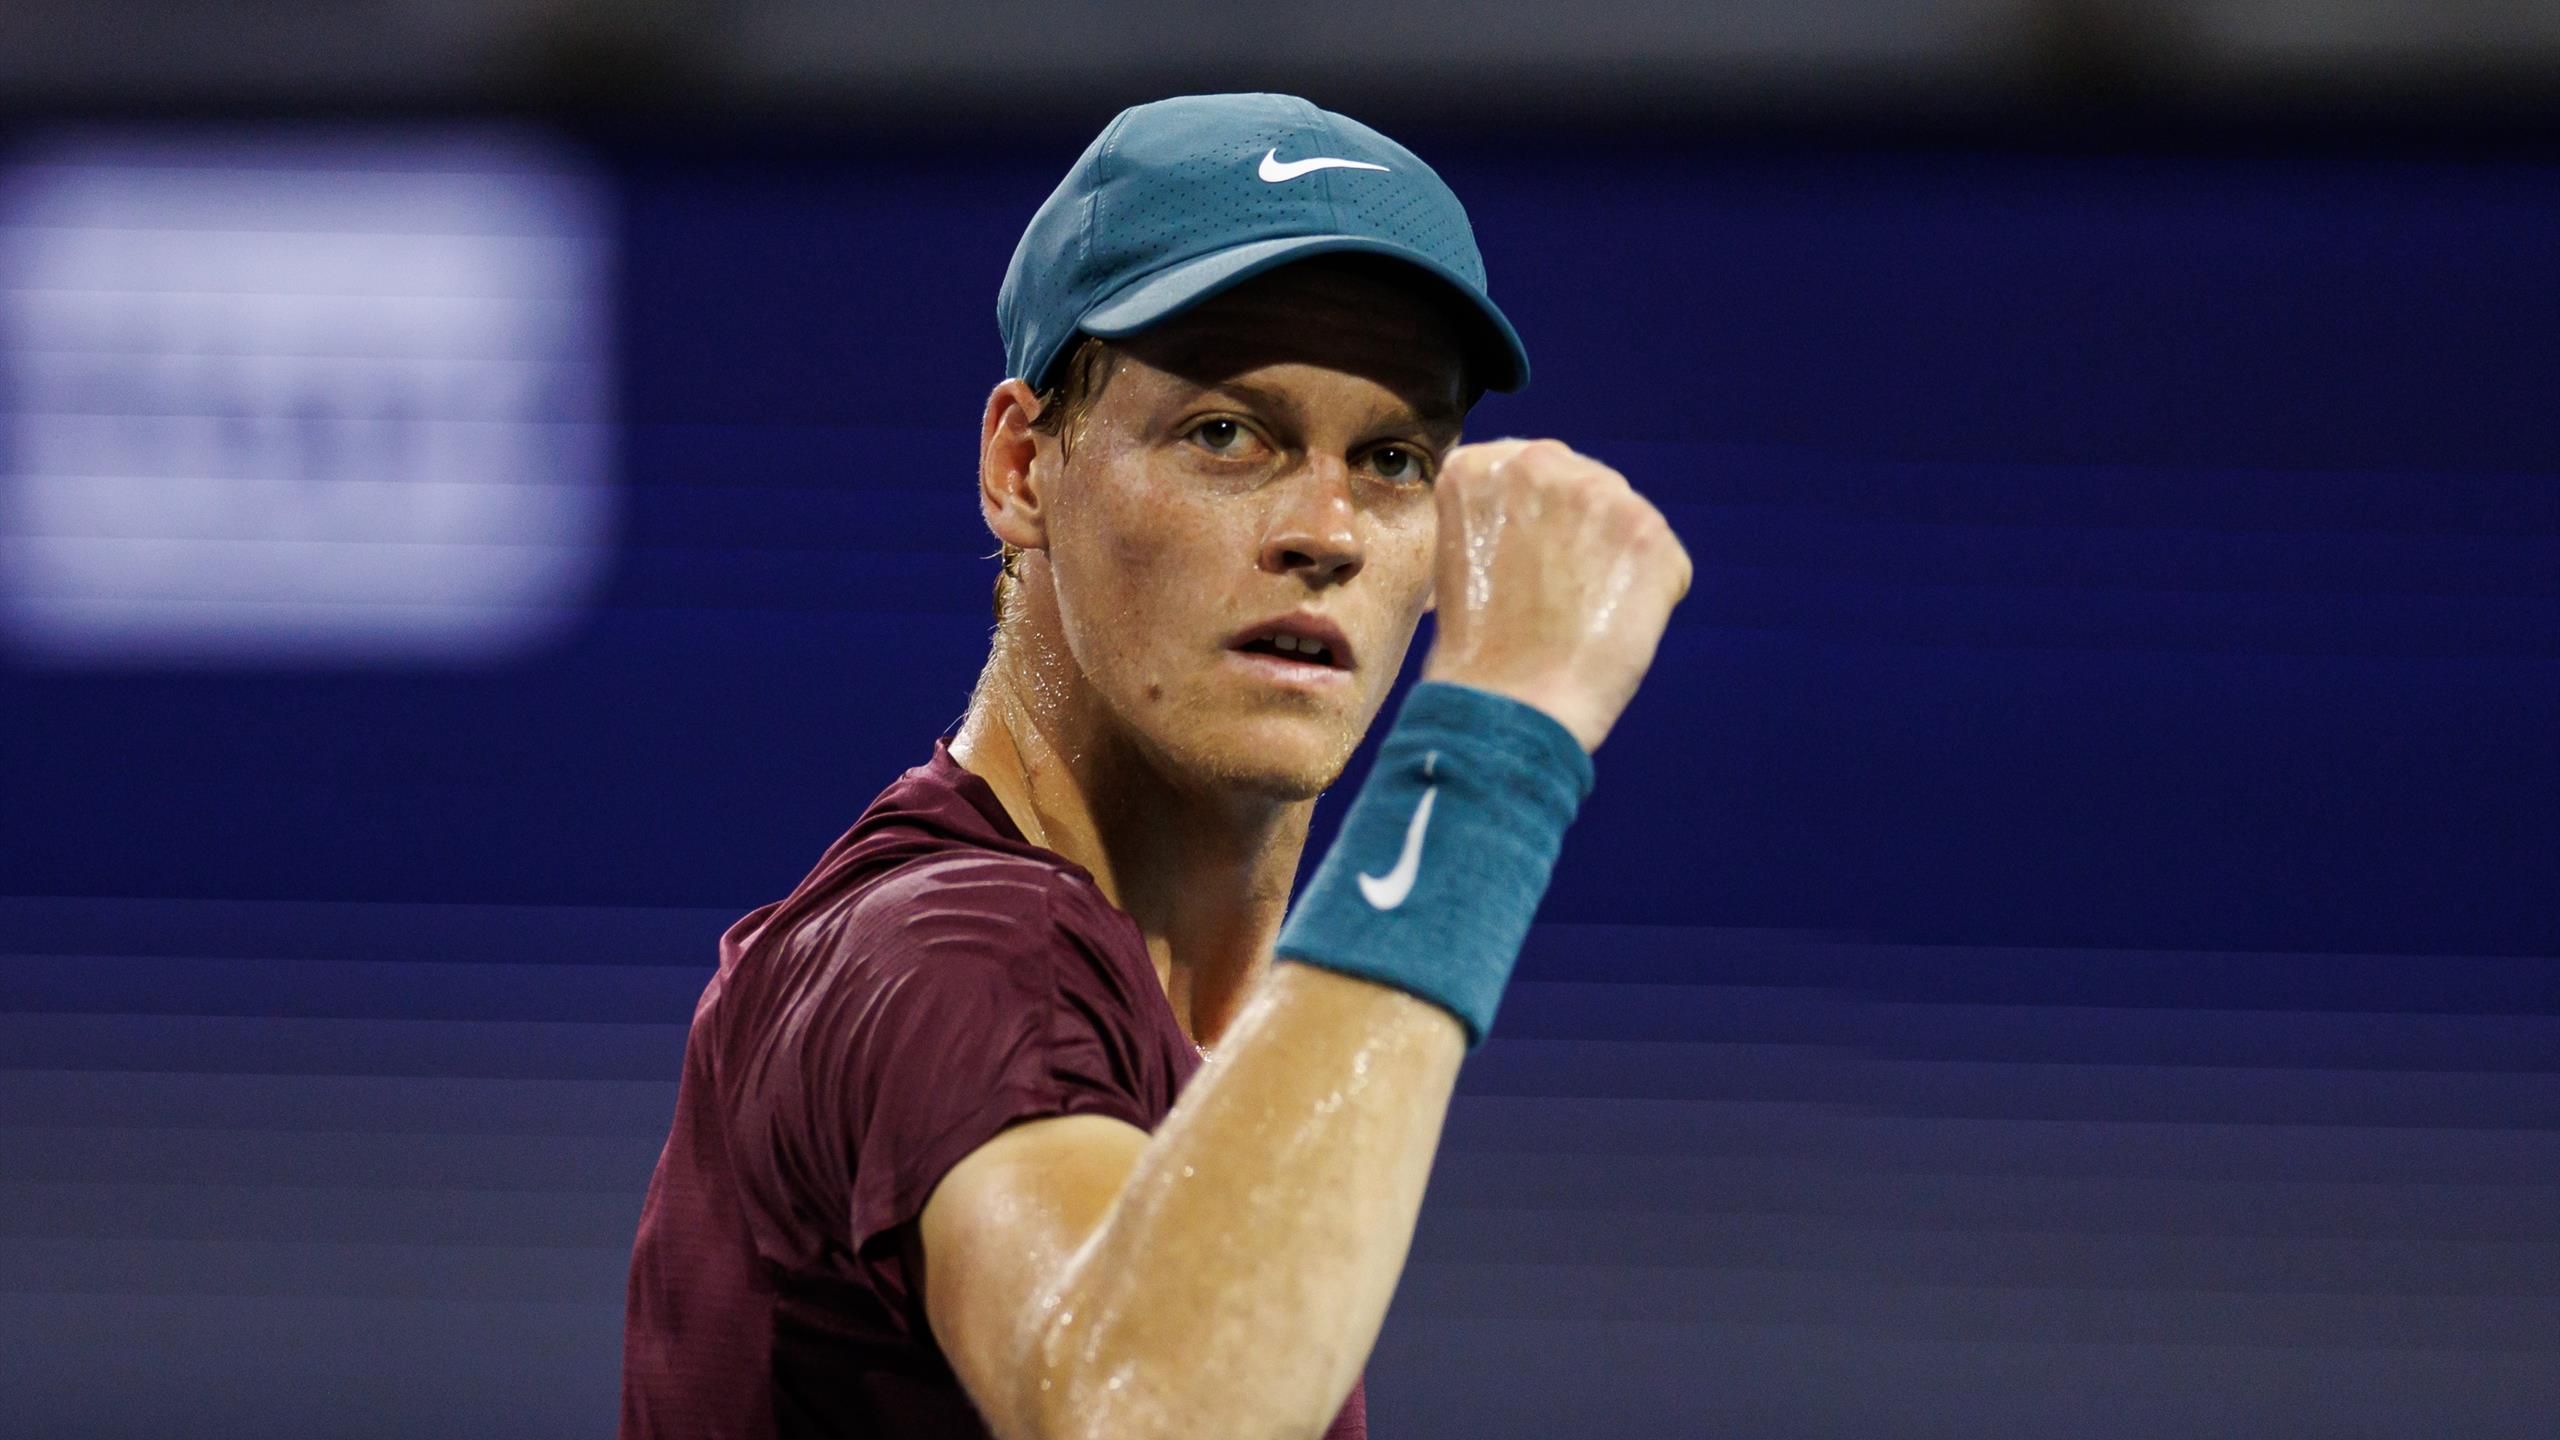 ATP Masters in Miami Jannik Sinner stoppt Carlos Alcaraz im Halbfinale - die Highlights im Video - Tennis Video